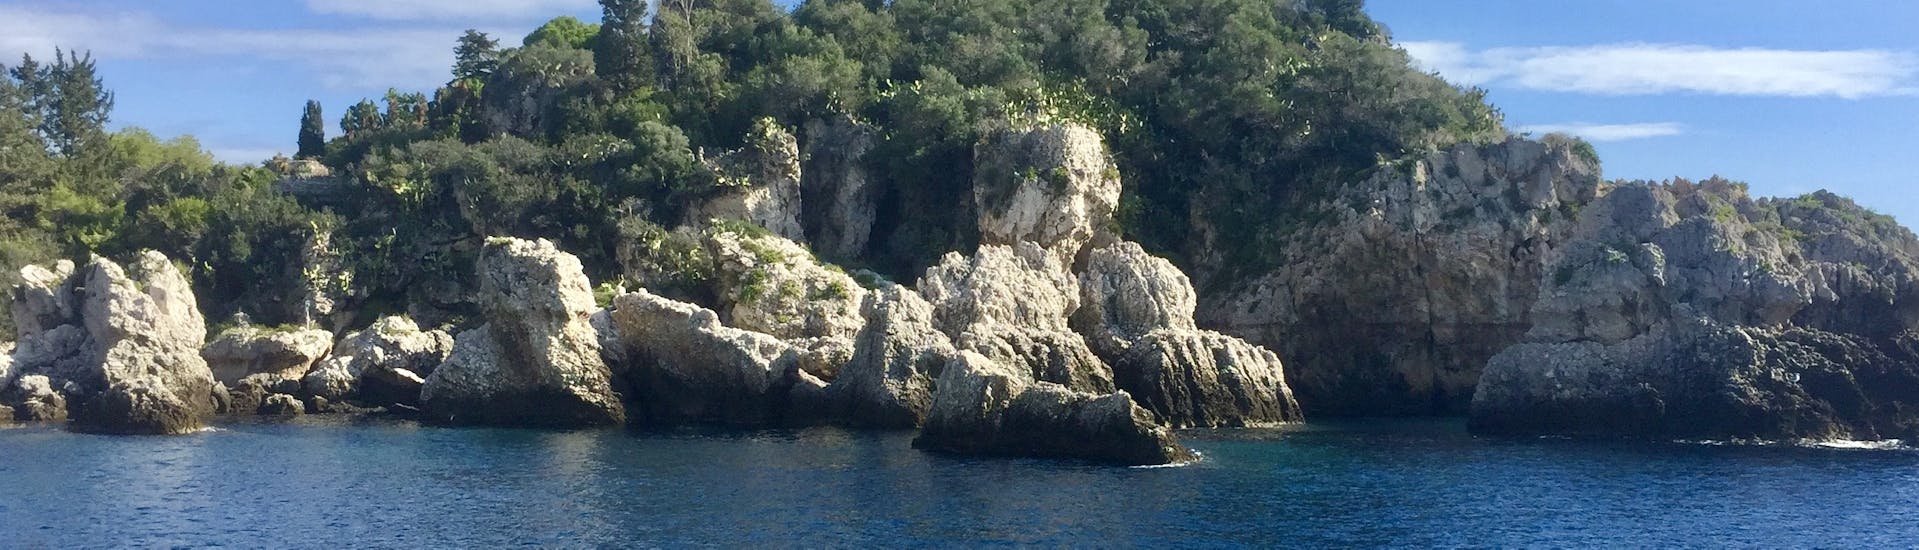 Boottocht van Giardini Naxos naar Giardini Naxos  & zwemmen.